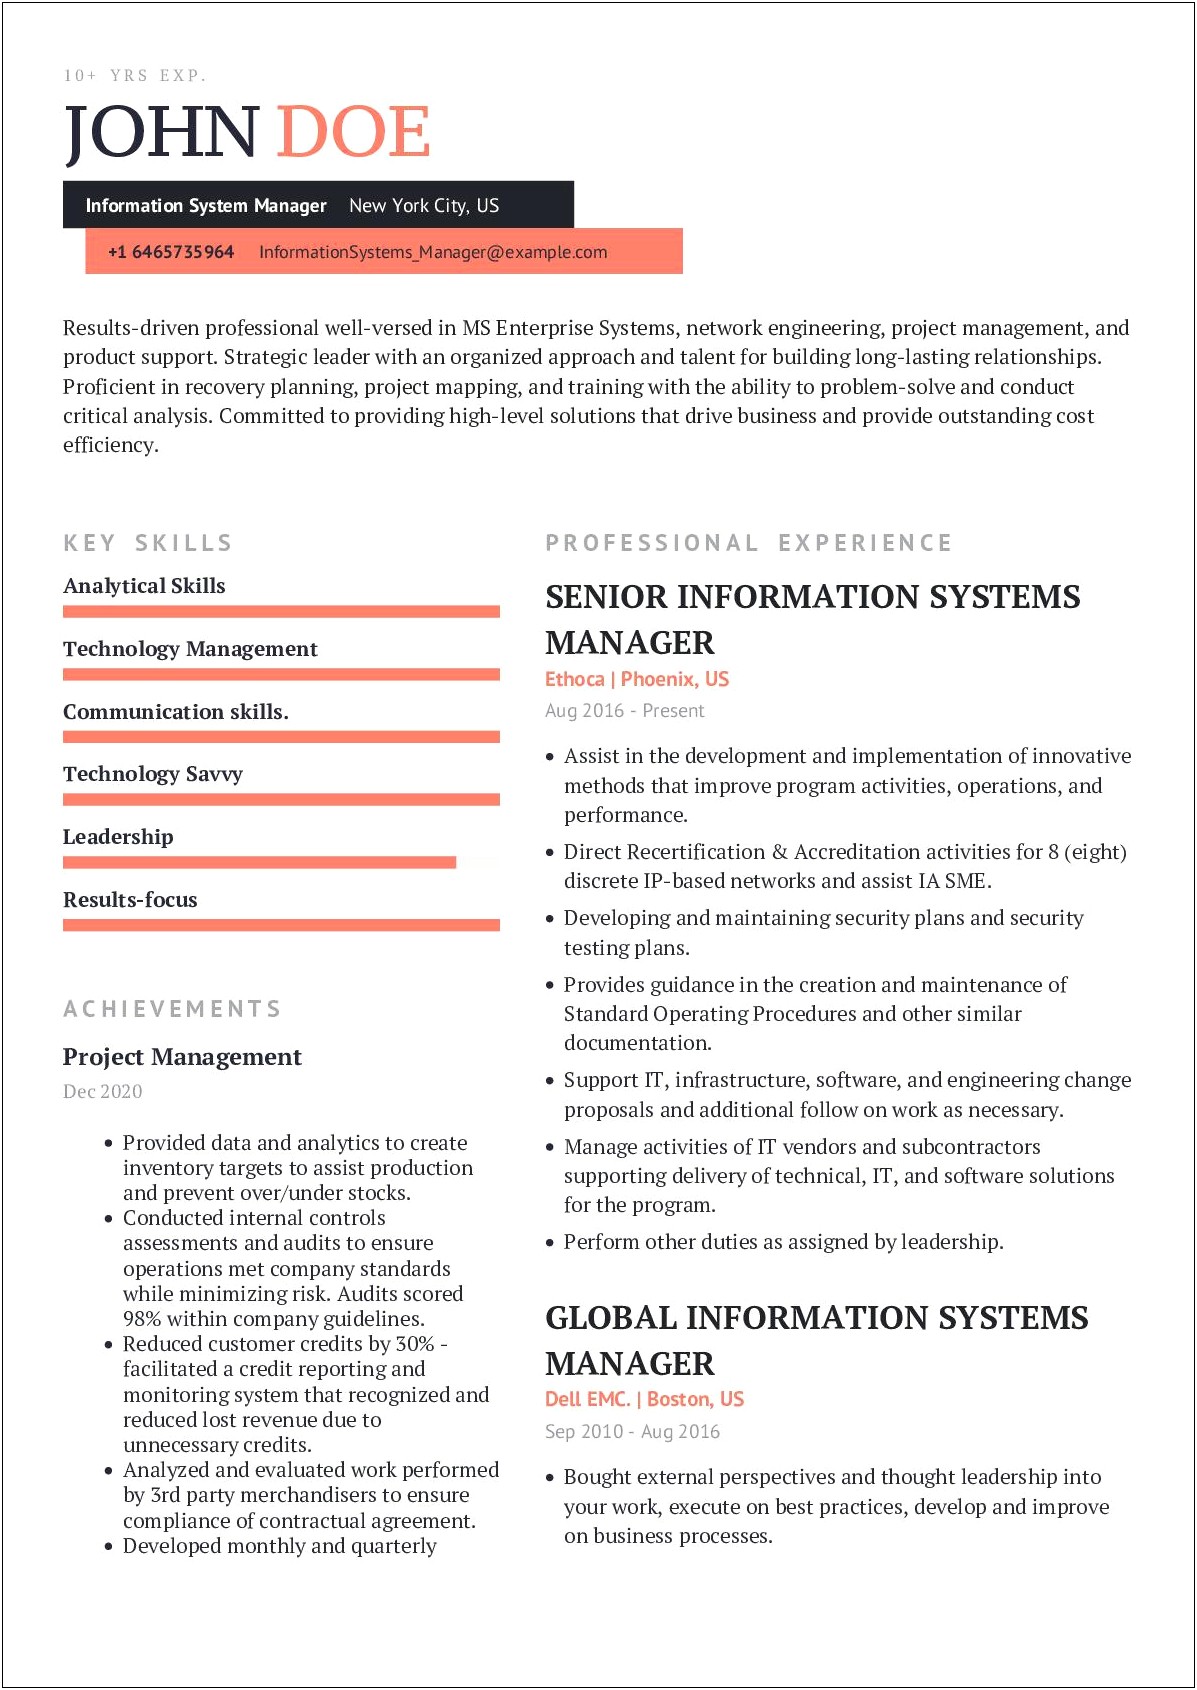 Content Management System Sample Resume